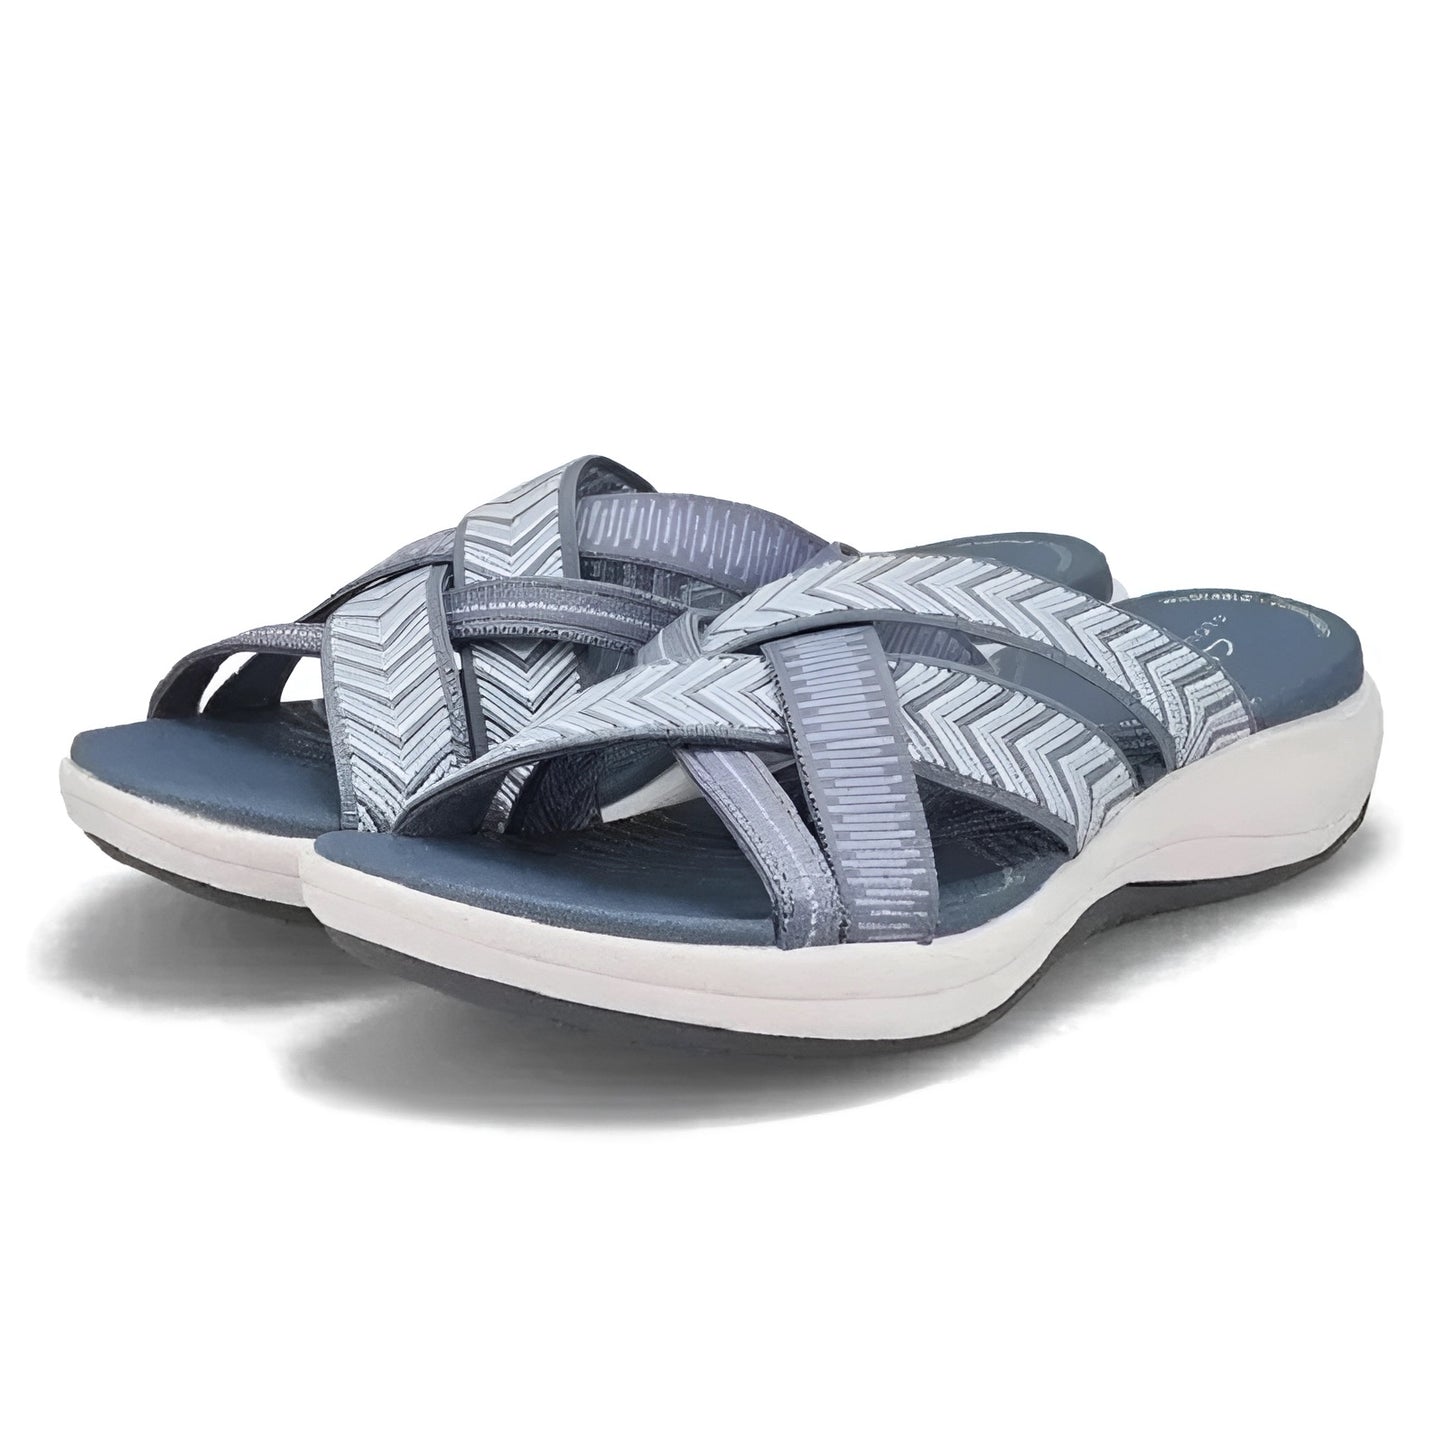 GRW Orthopedic Women Sandals Soft Comfortable Summer Sandal Trend